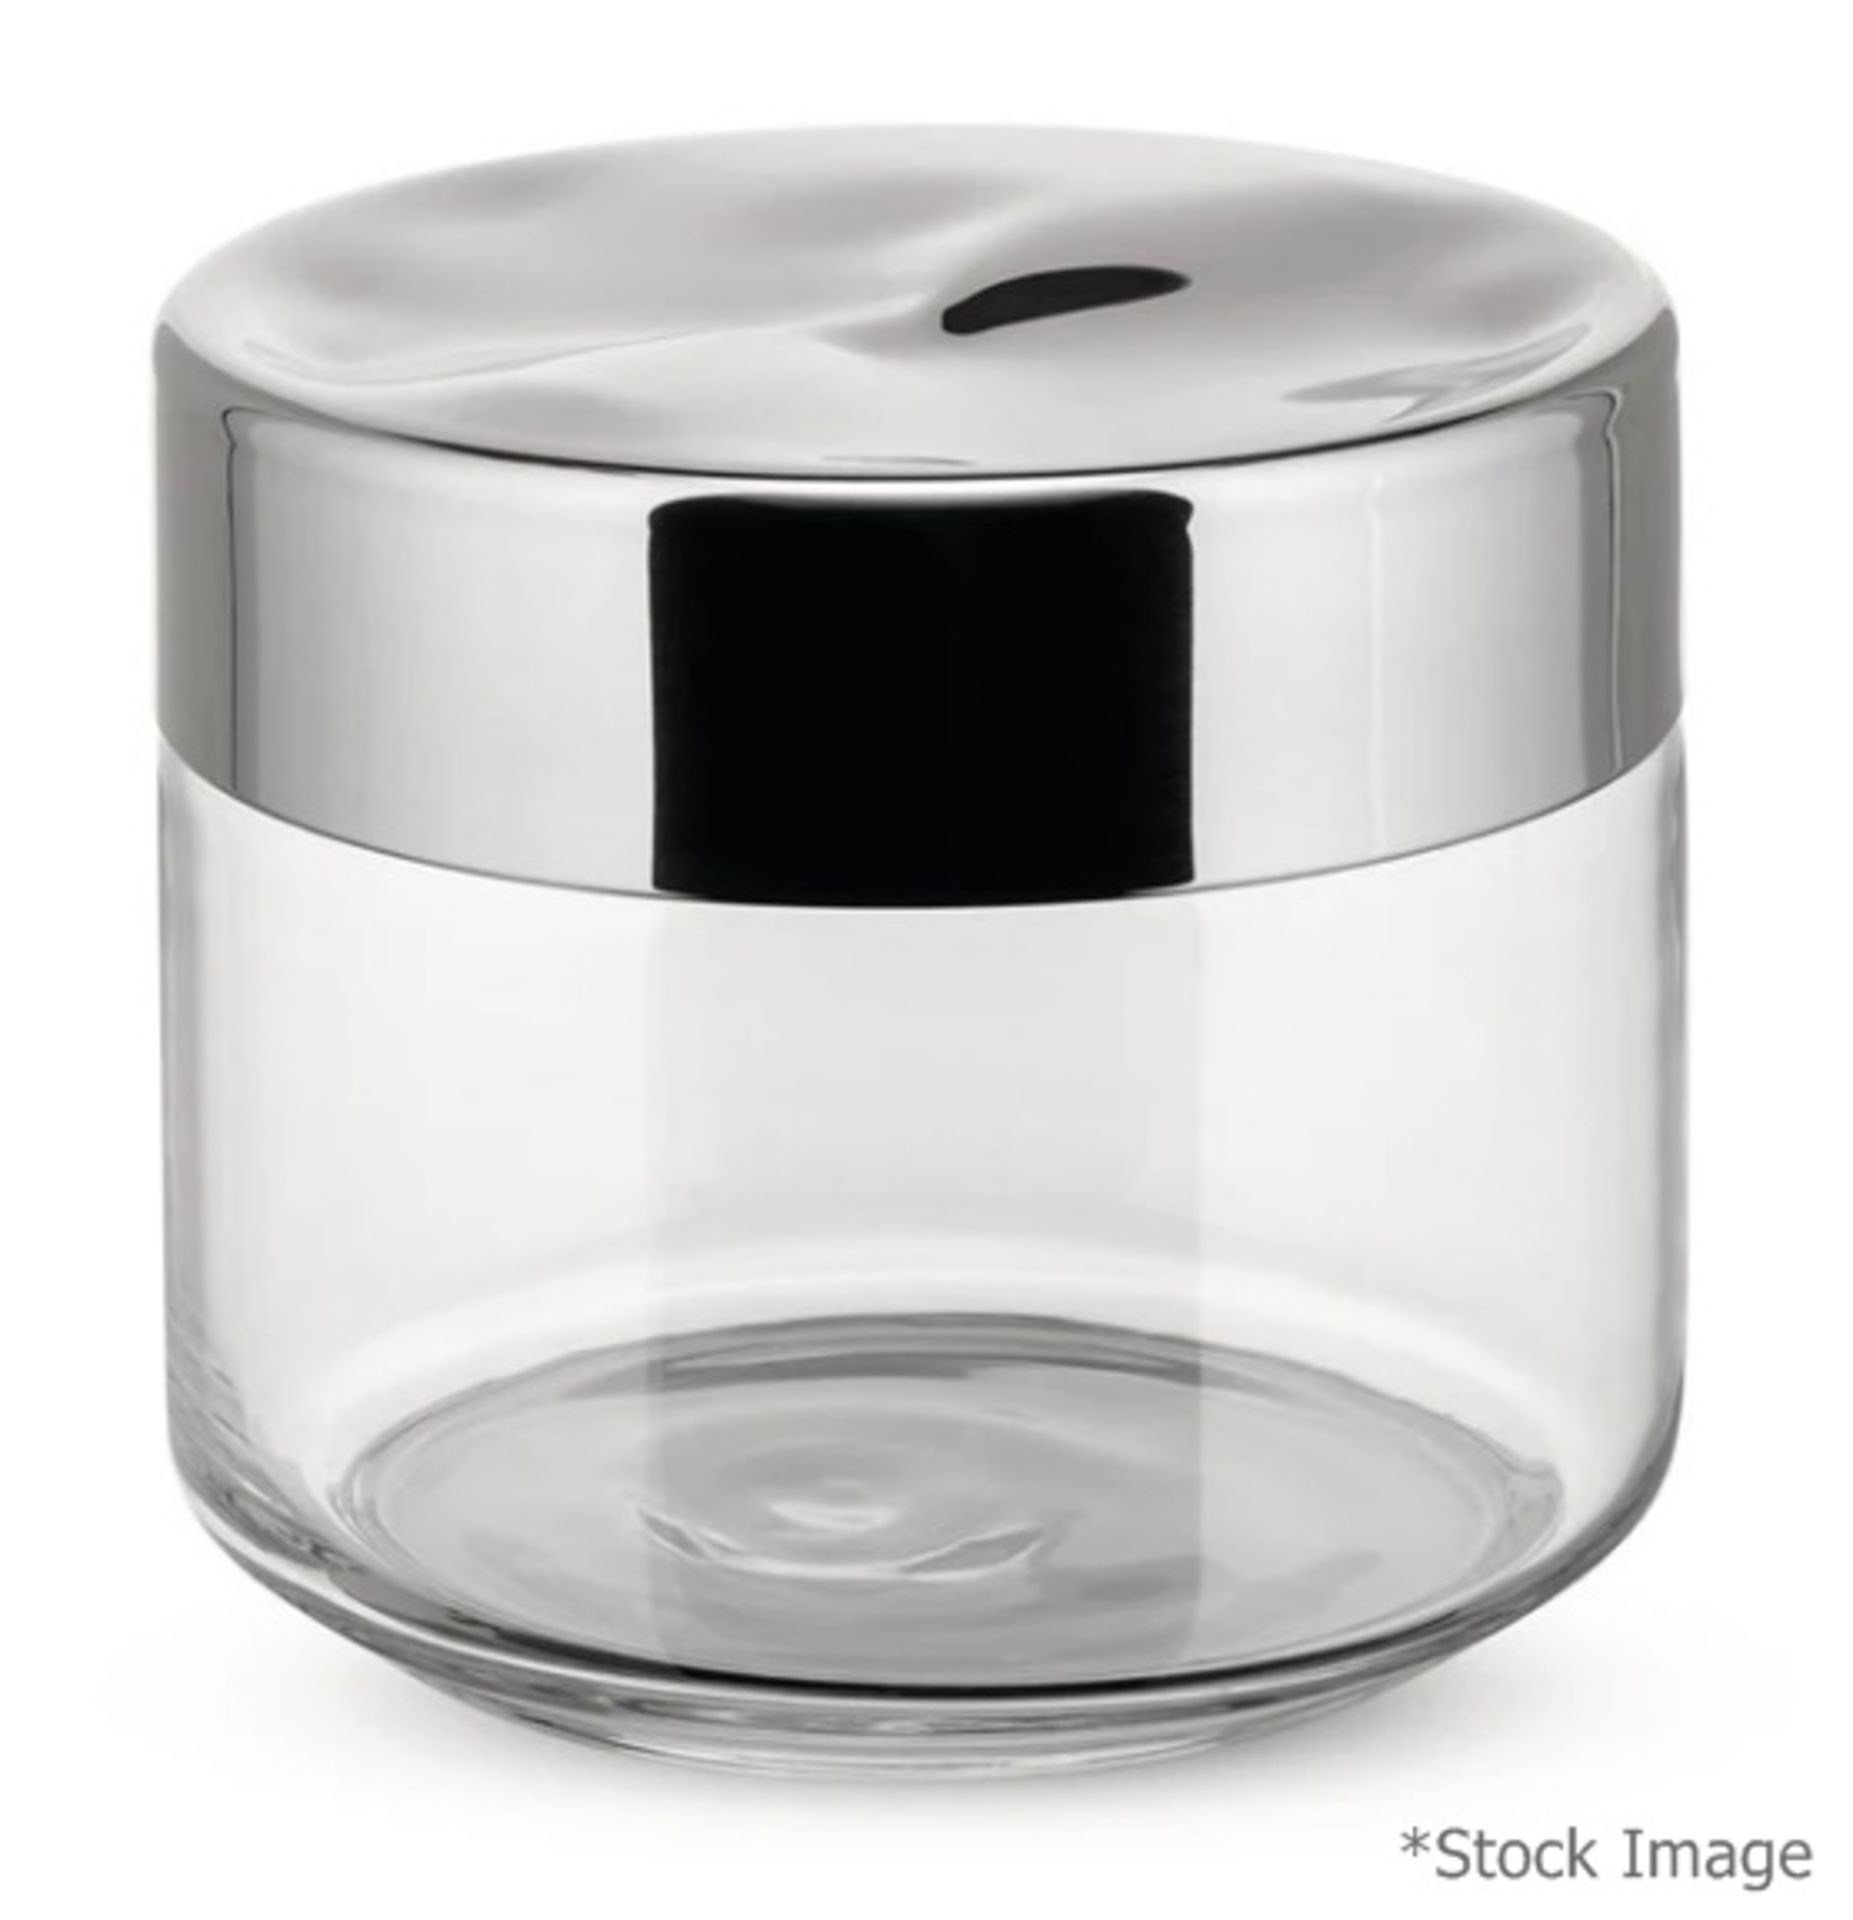 2 x ALESSI 'Julieta' Storage Jars - Heights Vary - Original Price £78.00 - Image 6 of 6